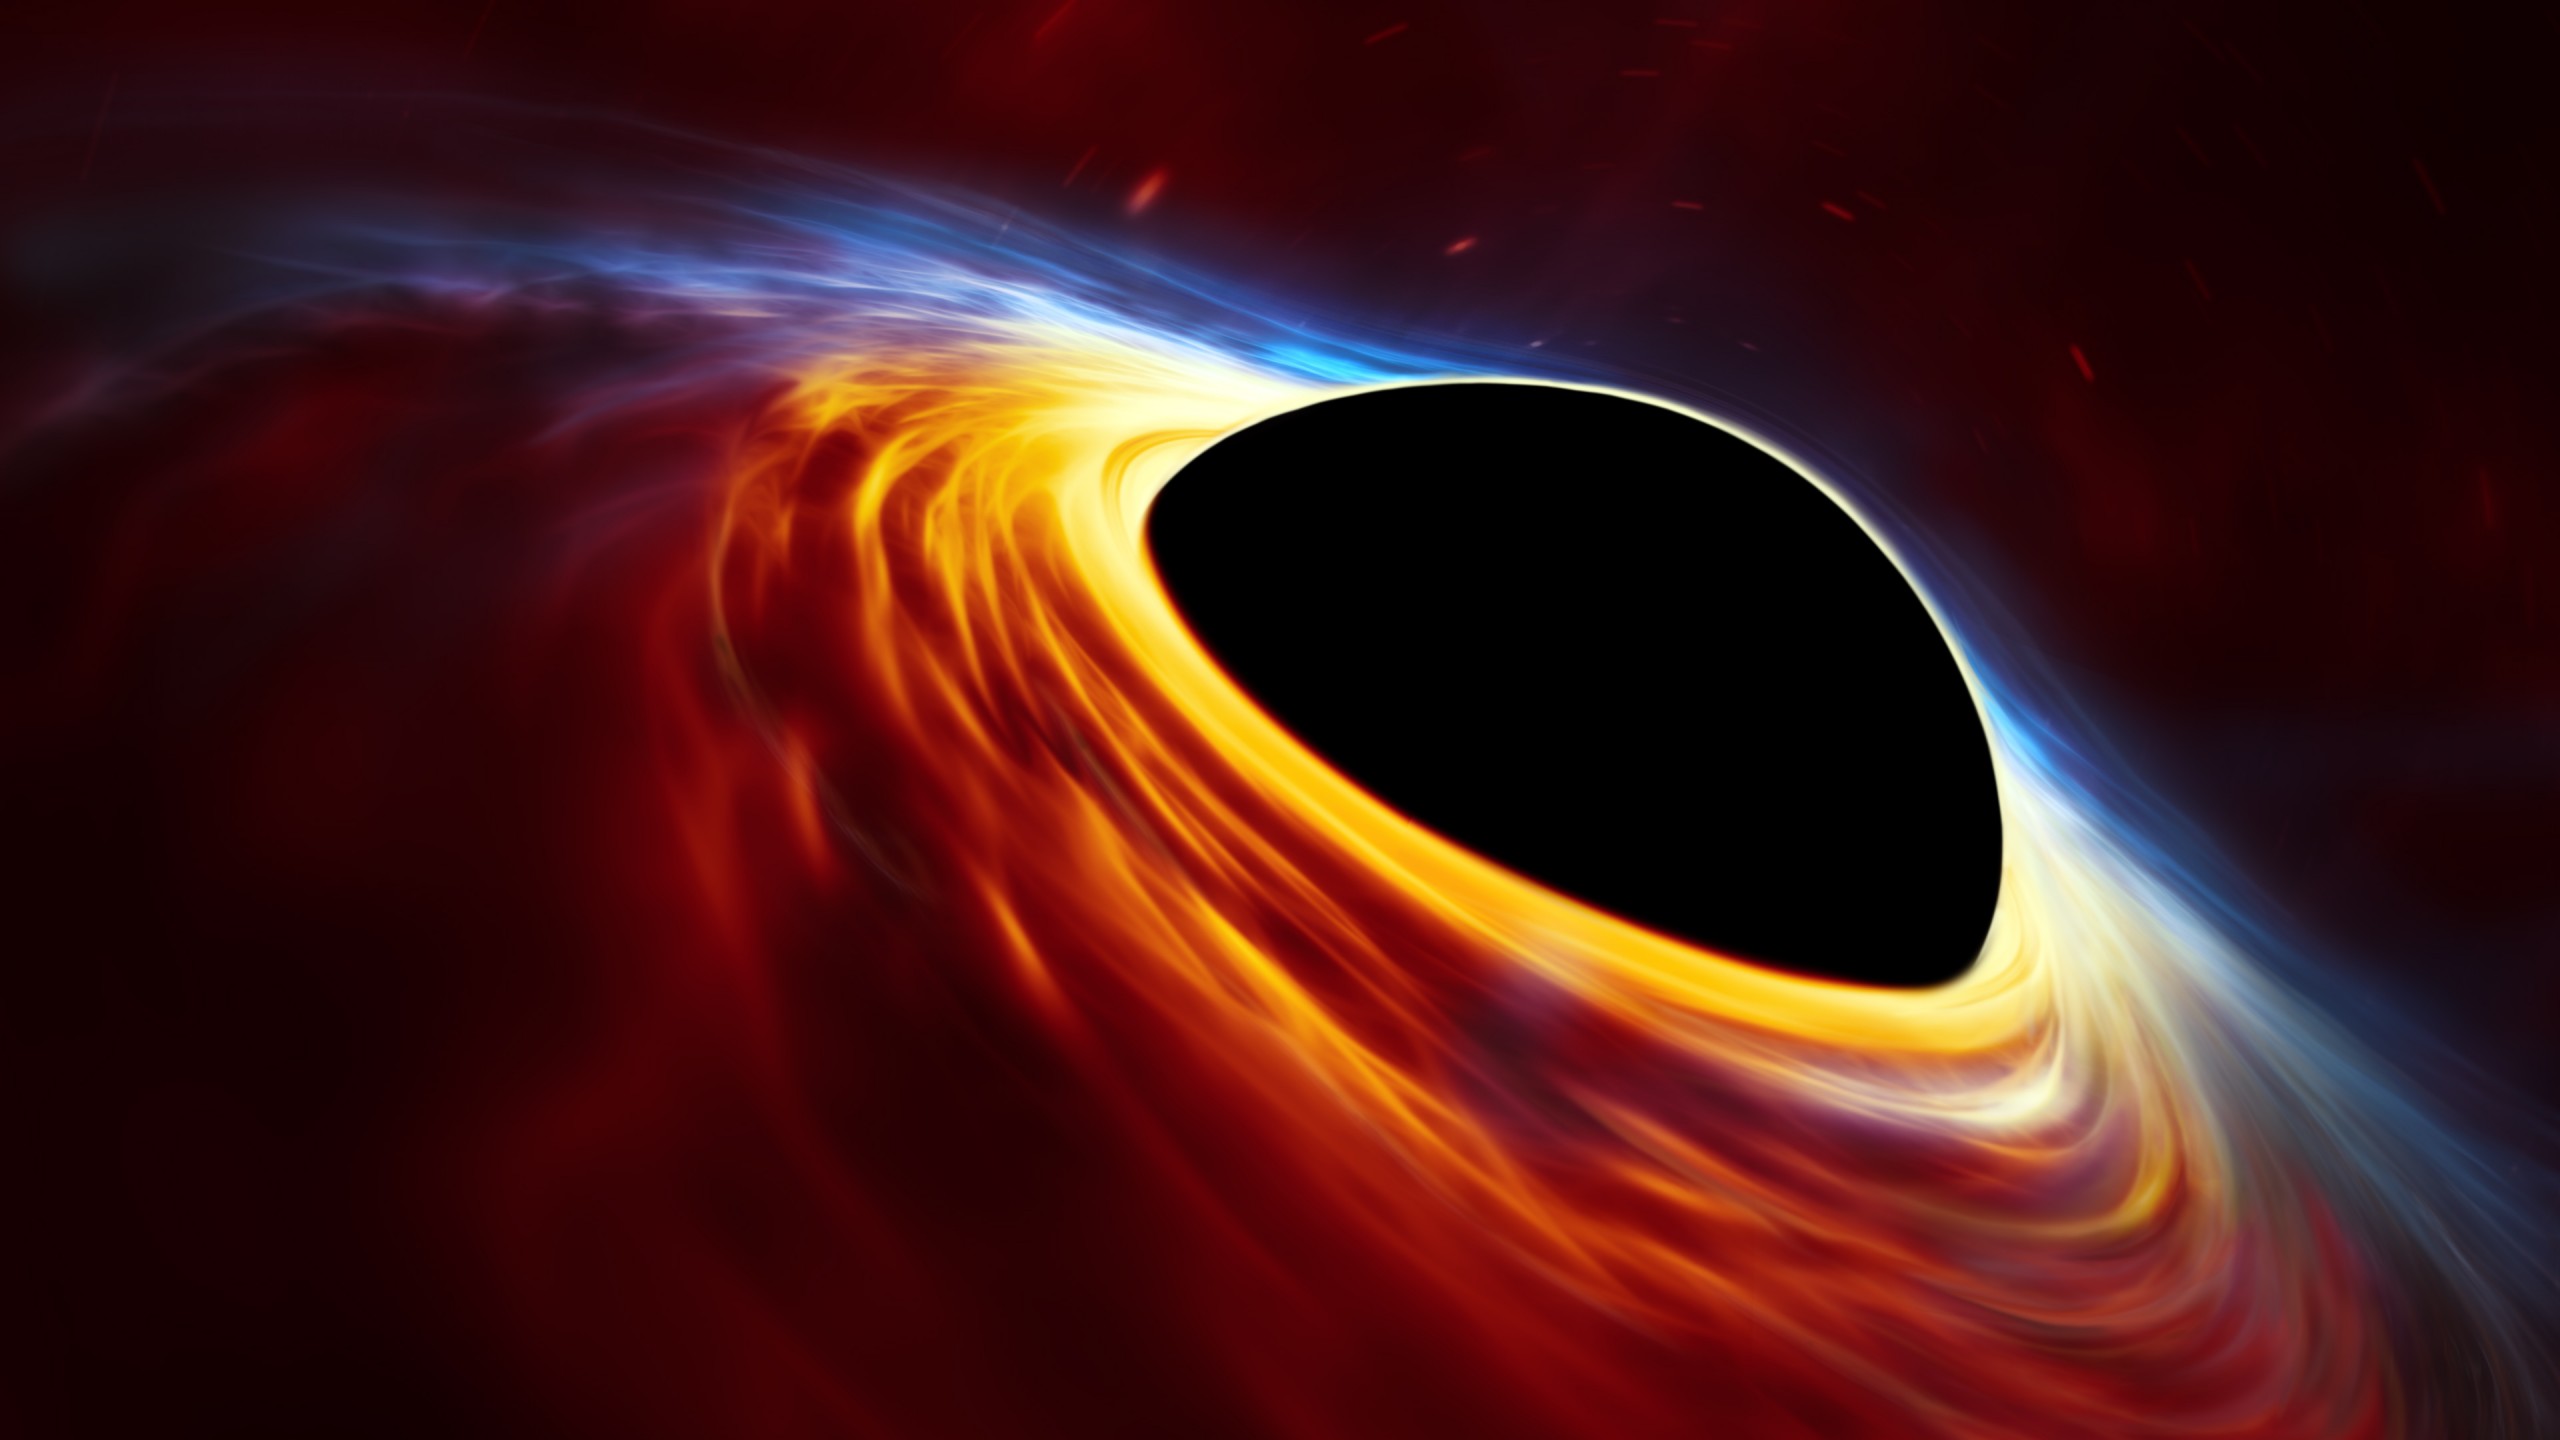 Free Download Supermassive Black Hole Hd Wallpaper for Desktop and Mobiles ...